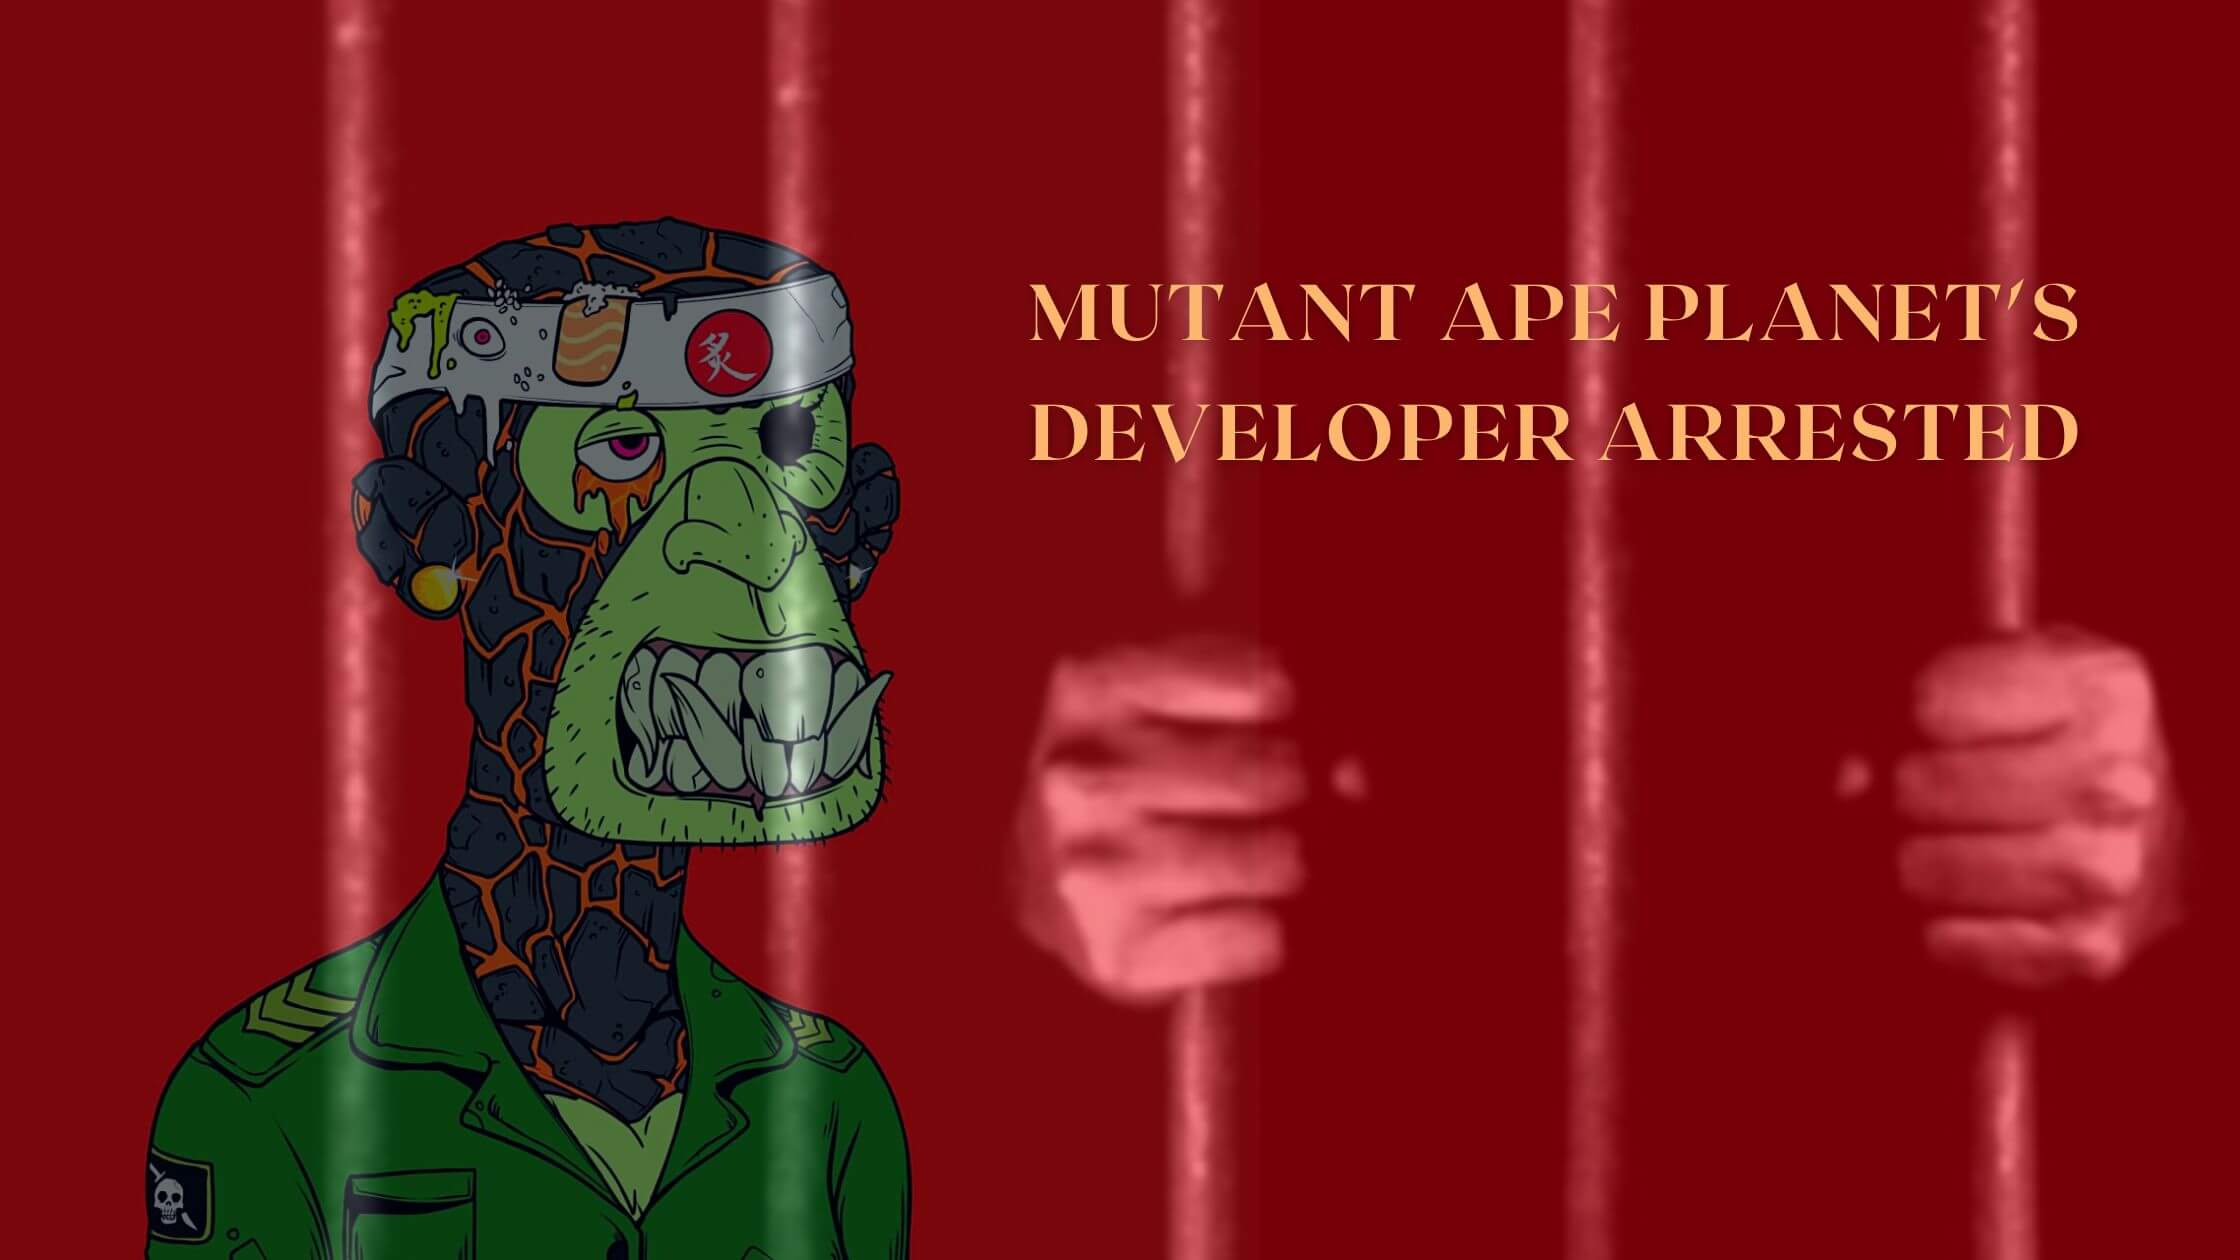 New York Authorities Arrested Mutant Ape Planet's Developer For $2.9M NFT Fraud